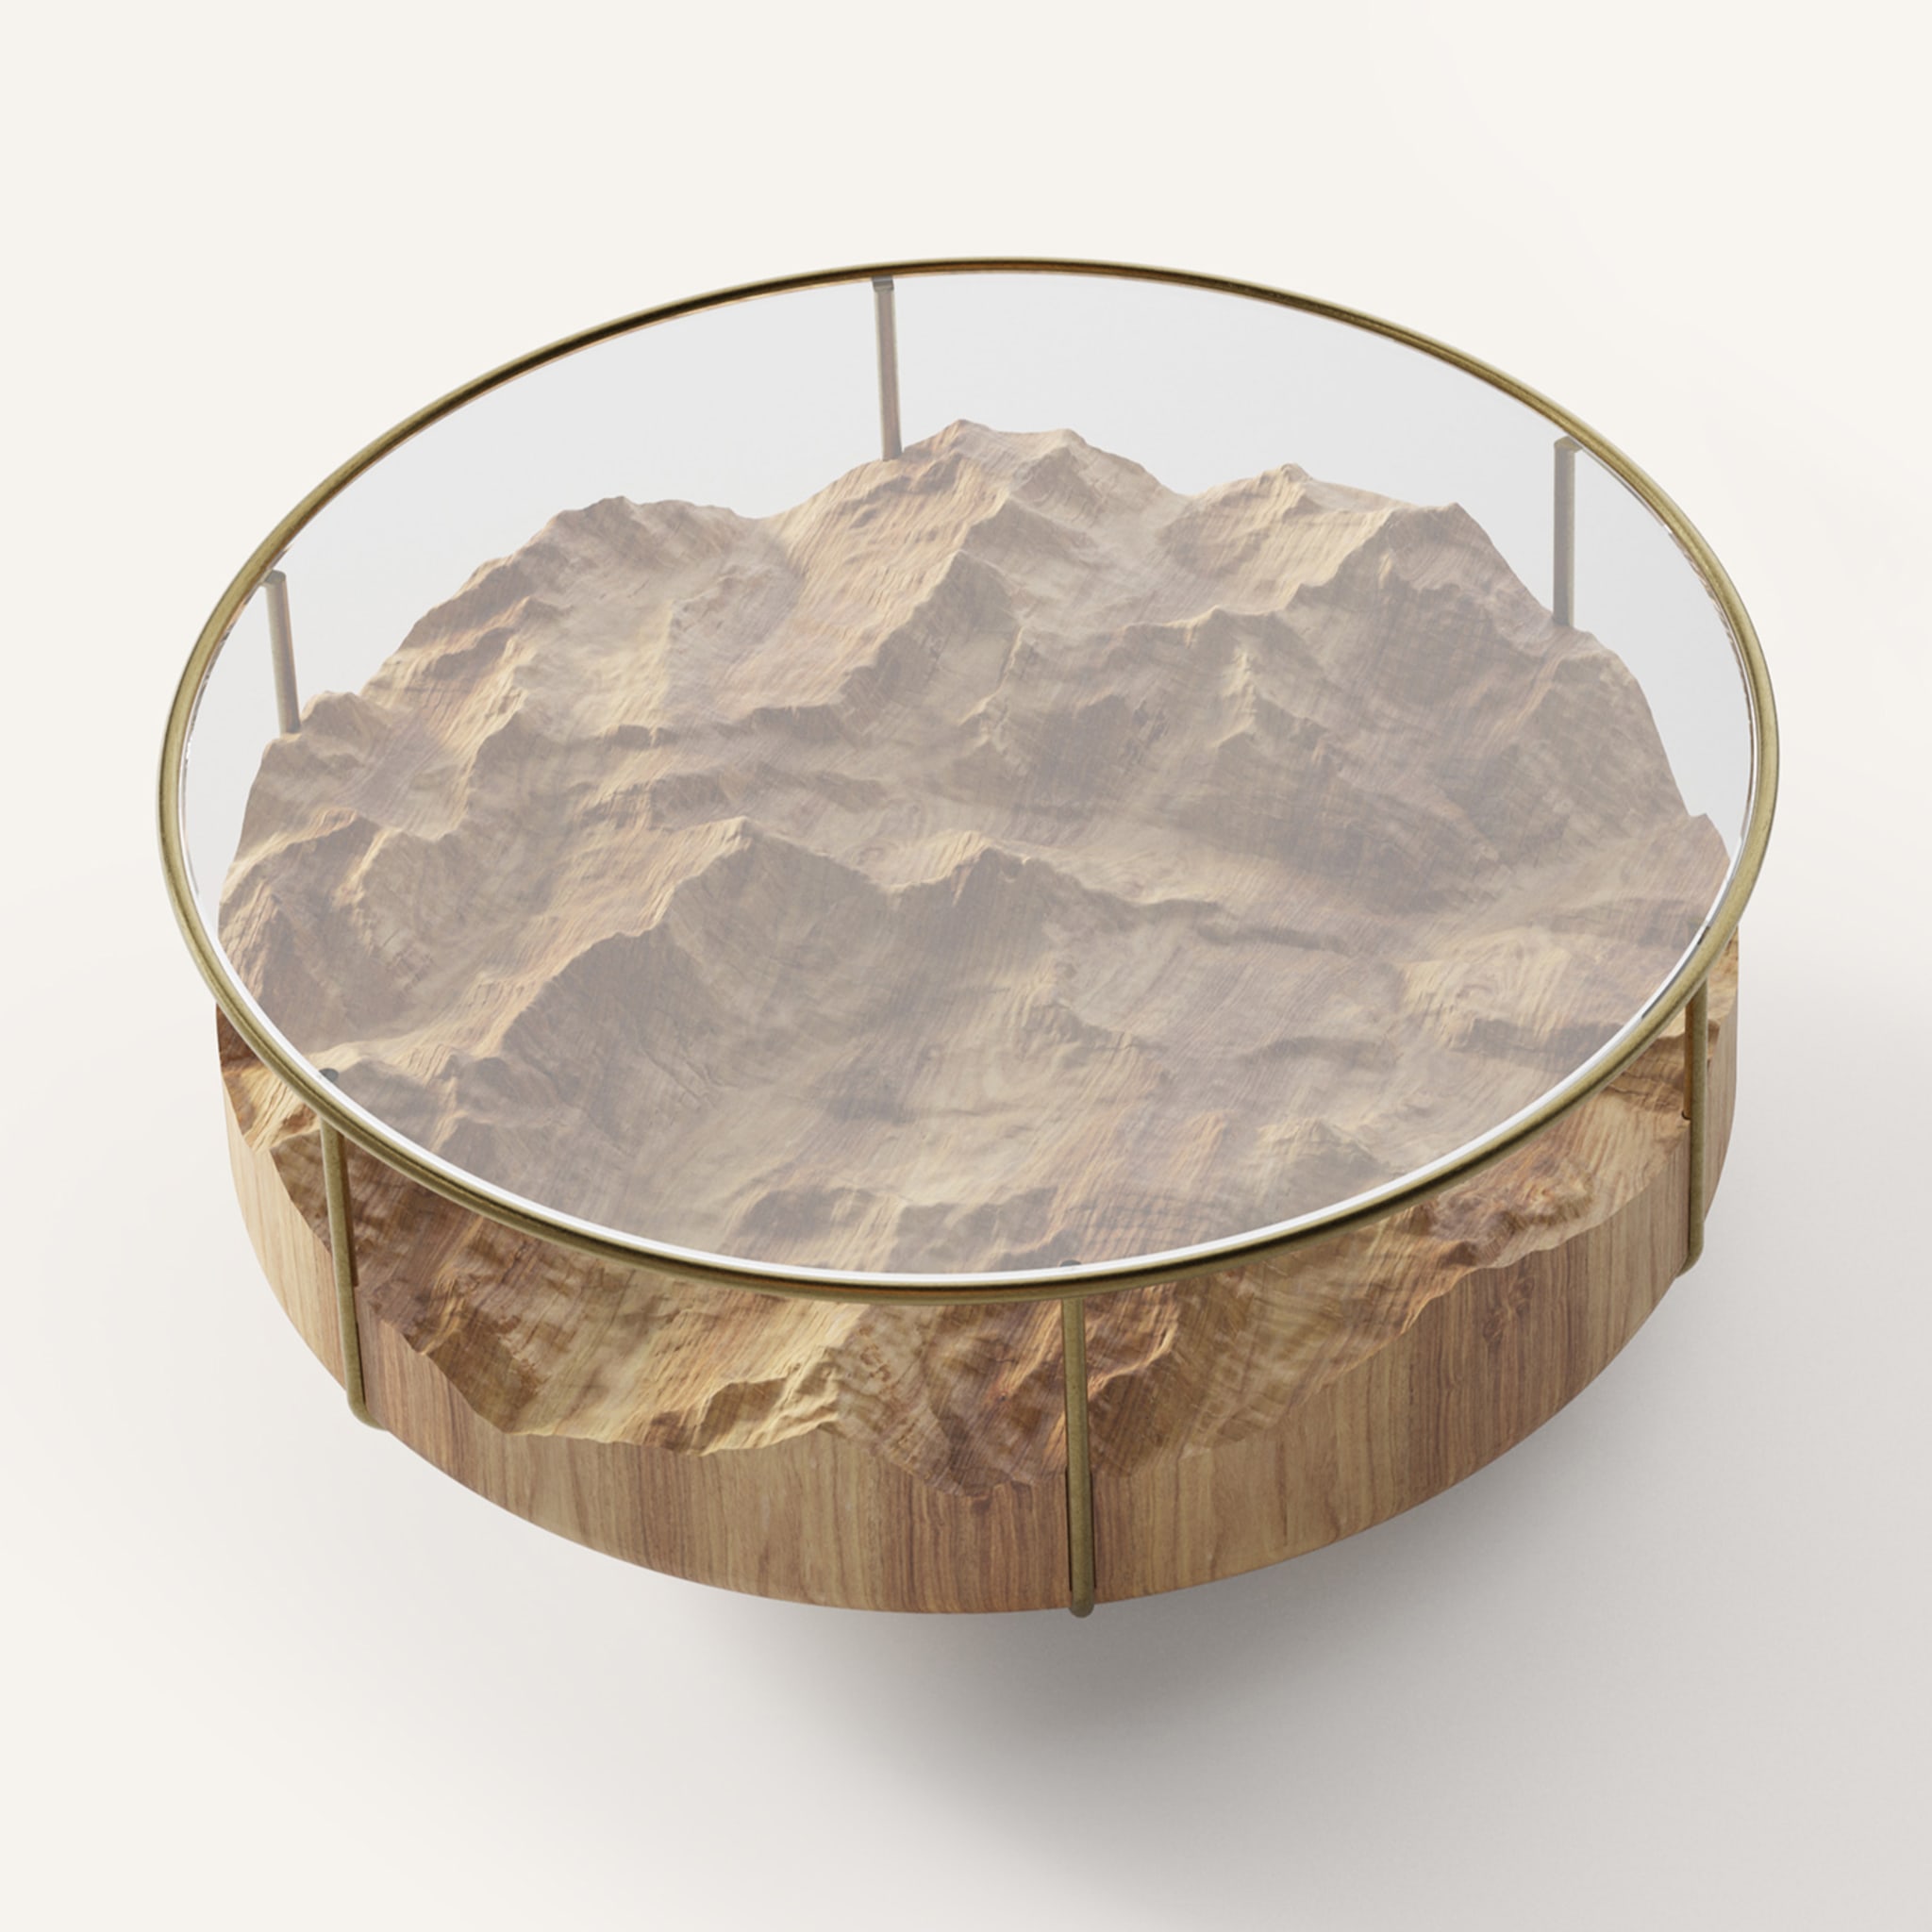 Mirage Topographic Coffee Table Designed By Riccardo Vendramin - Alternative view 1